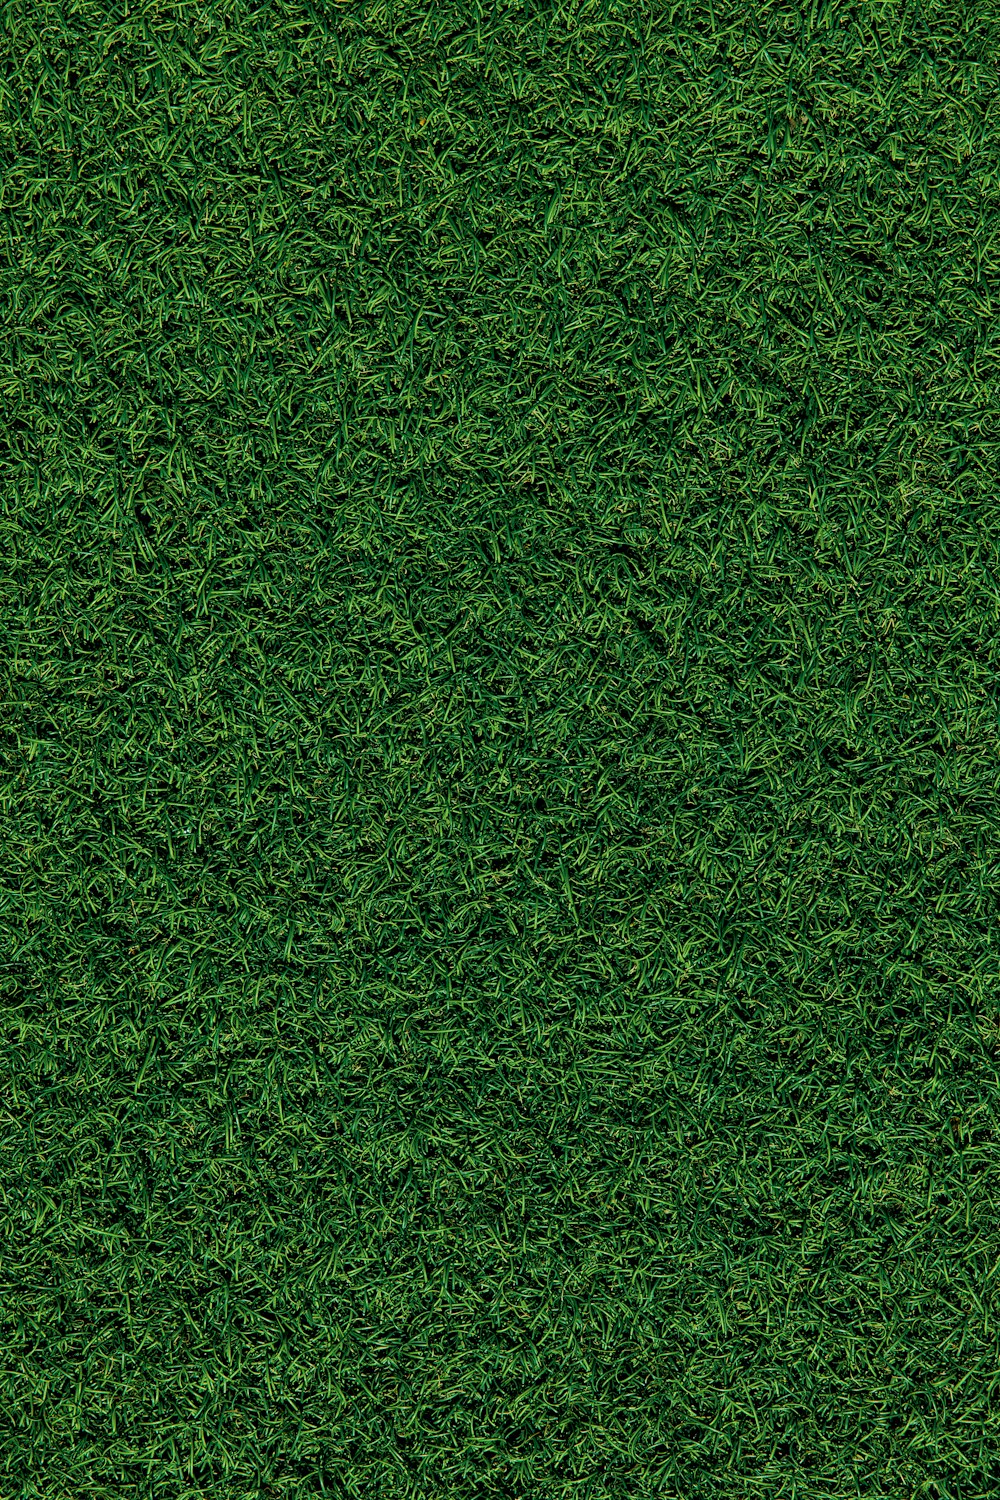 green grass field during daytime photo – Free Texture Image on Unsplash